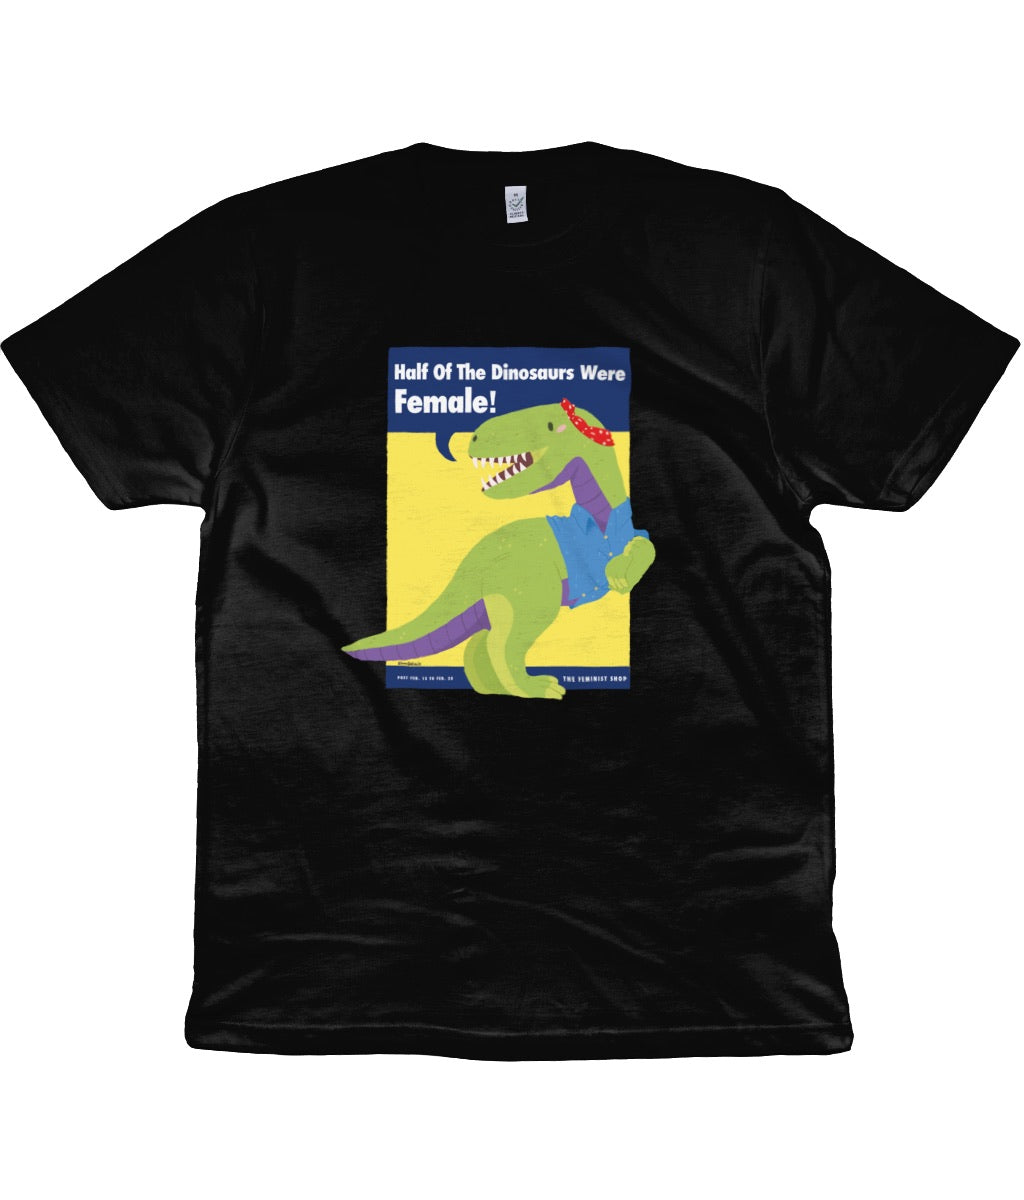 Feminist T Shirt - Half of the Dinosaurs were Female!